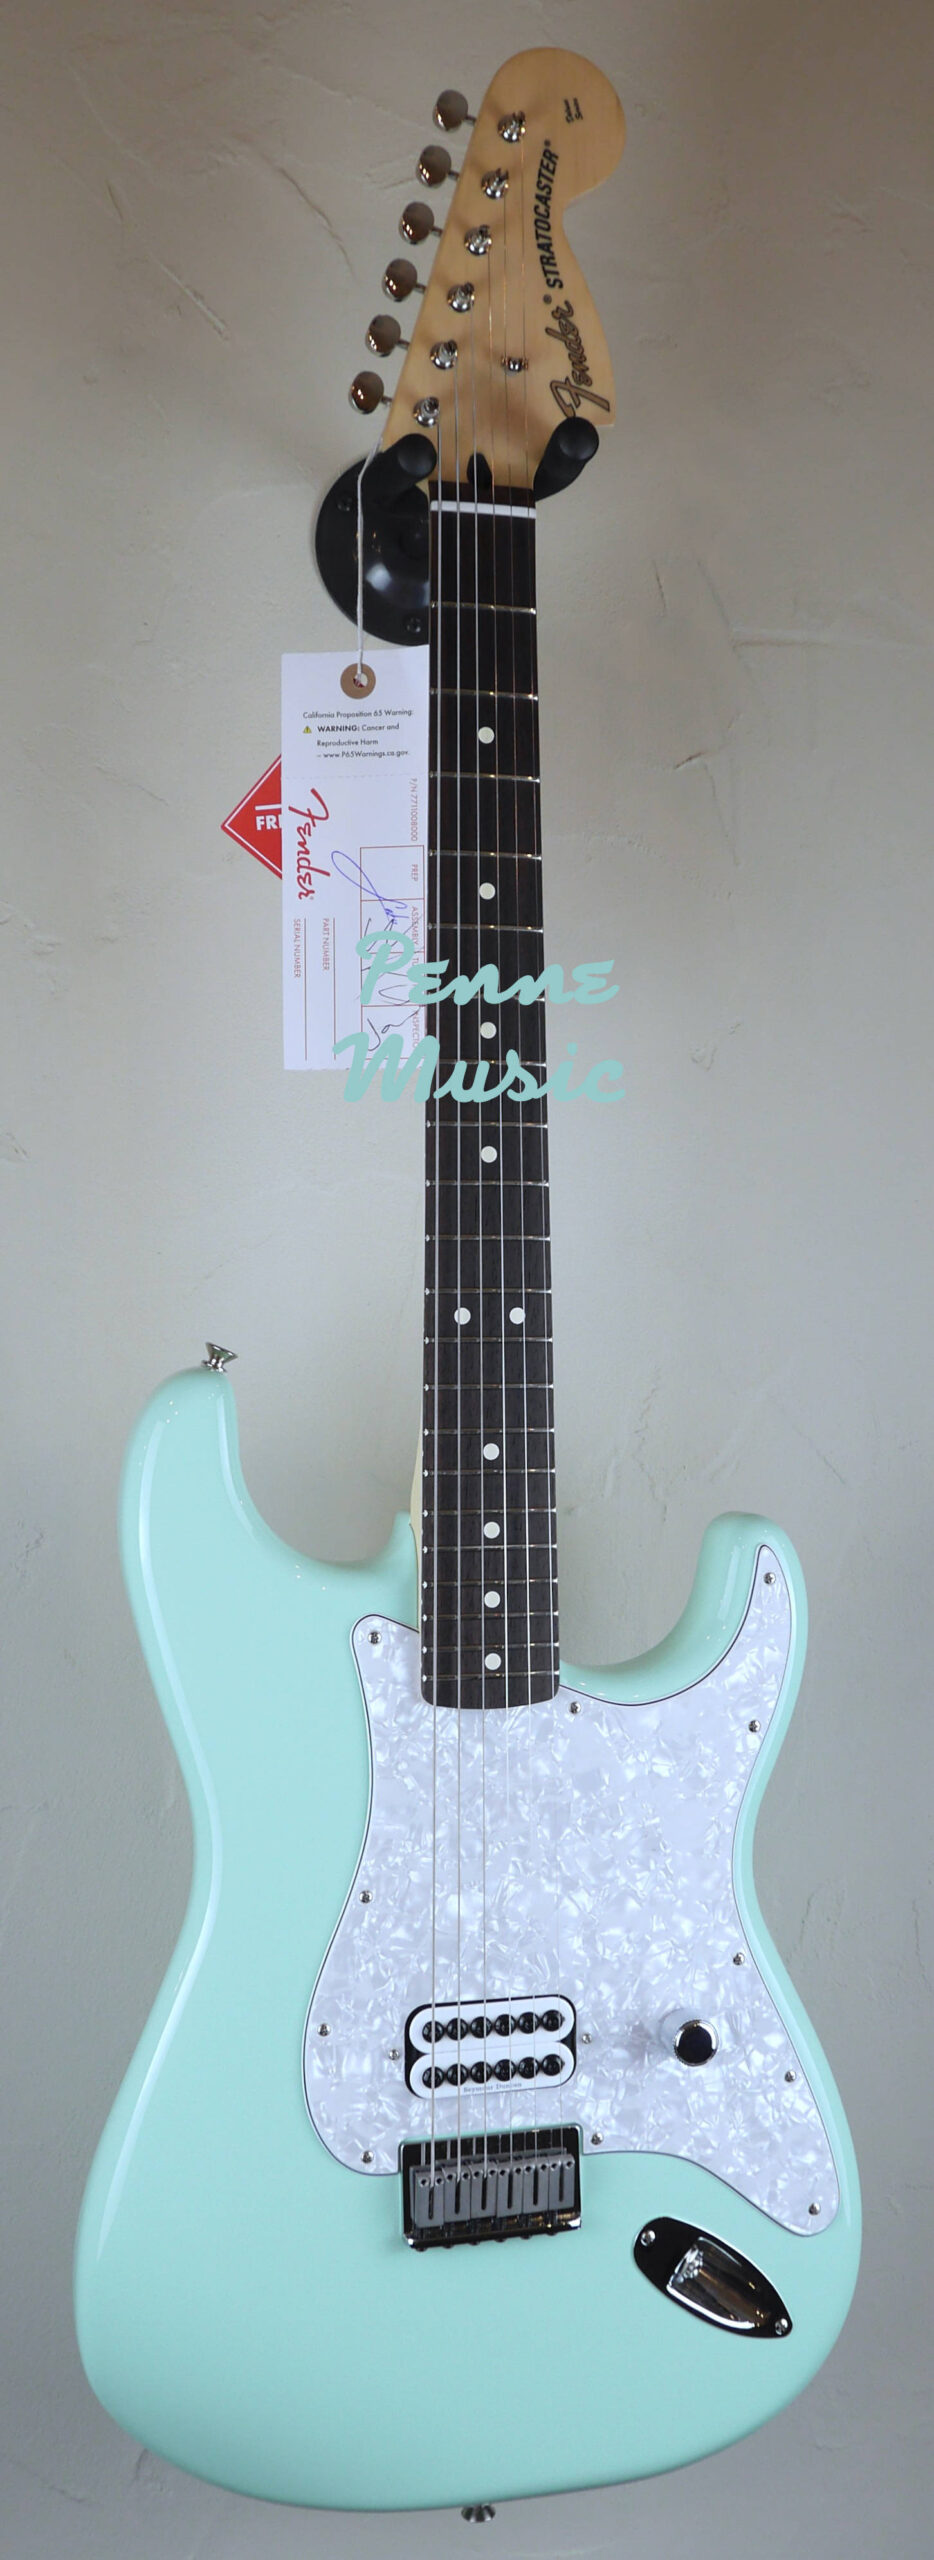 Fender Limited Edition Tom Delonge Stratocaster Surf Green 1